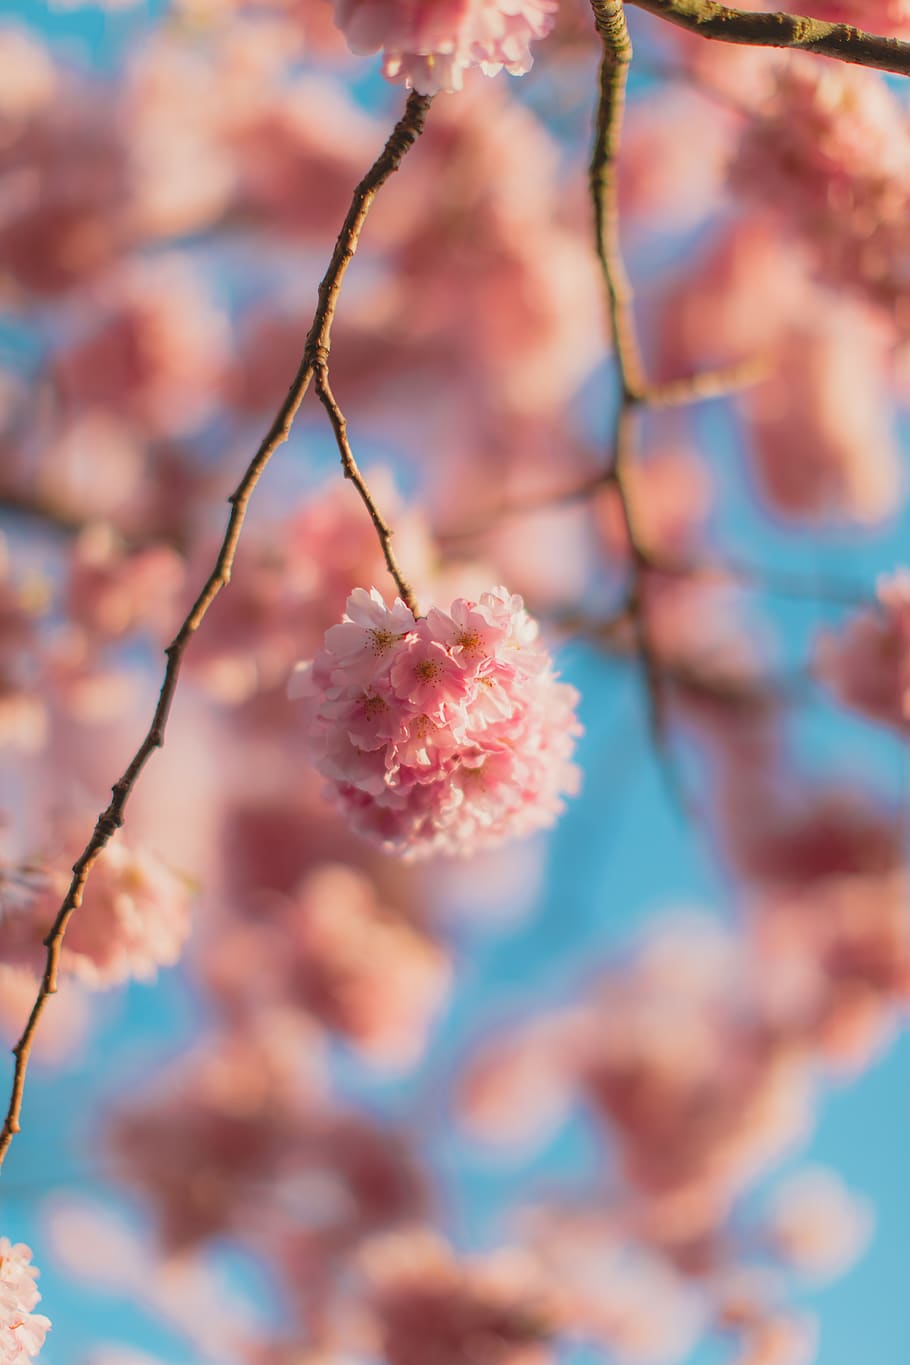 A branch of cherry blossoms against a blue sky - Cherry blossom